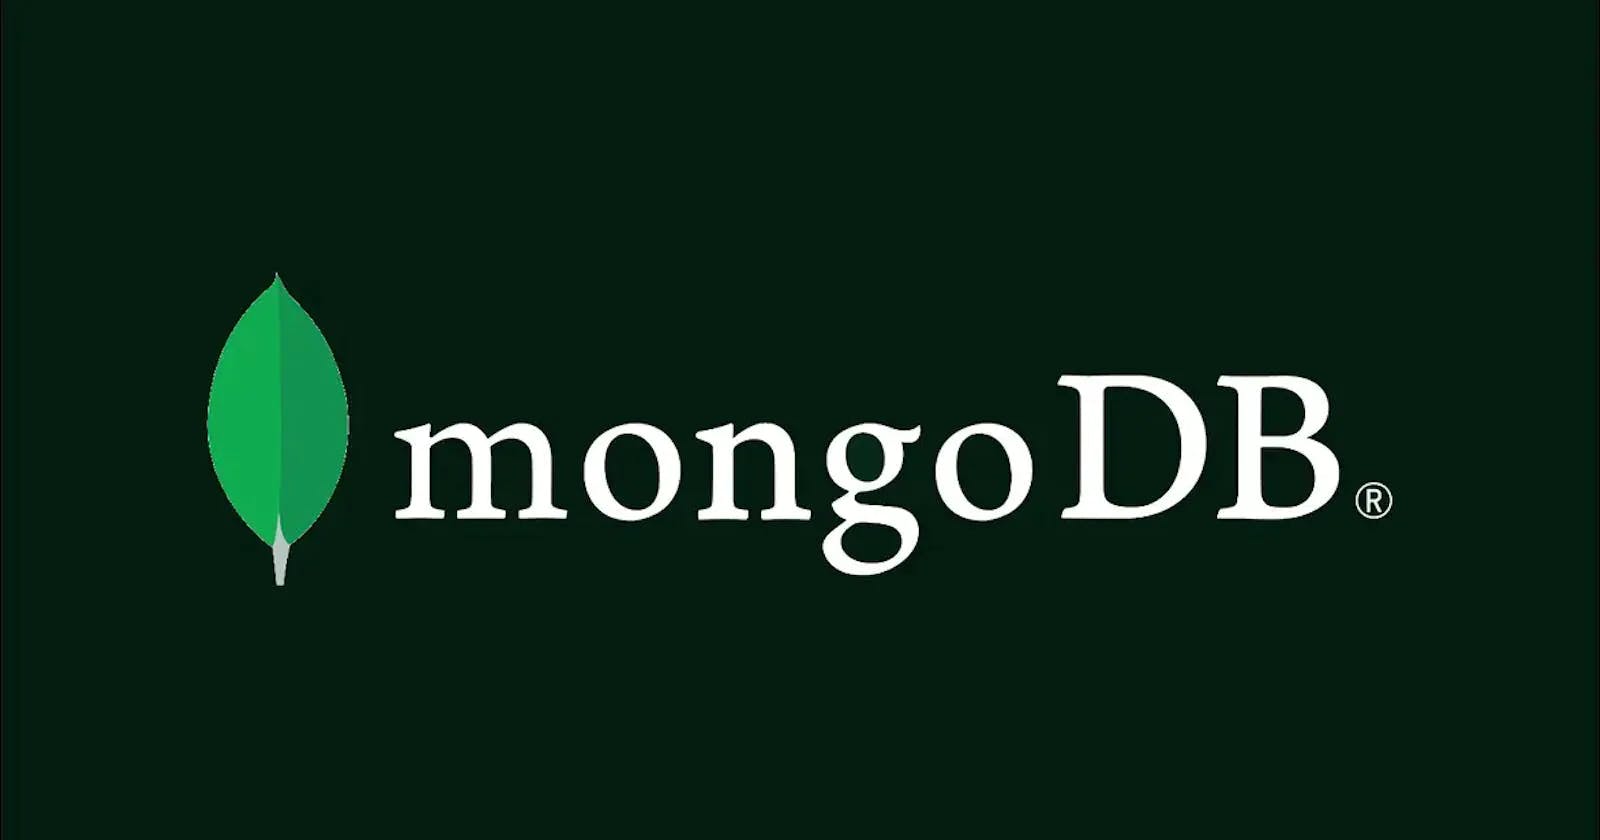 CRUD operations in MongoDB